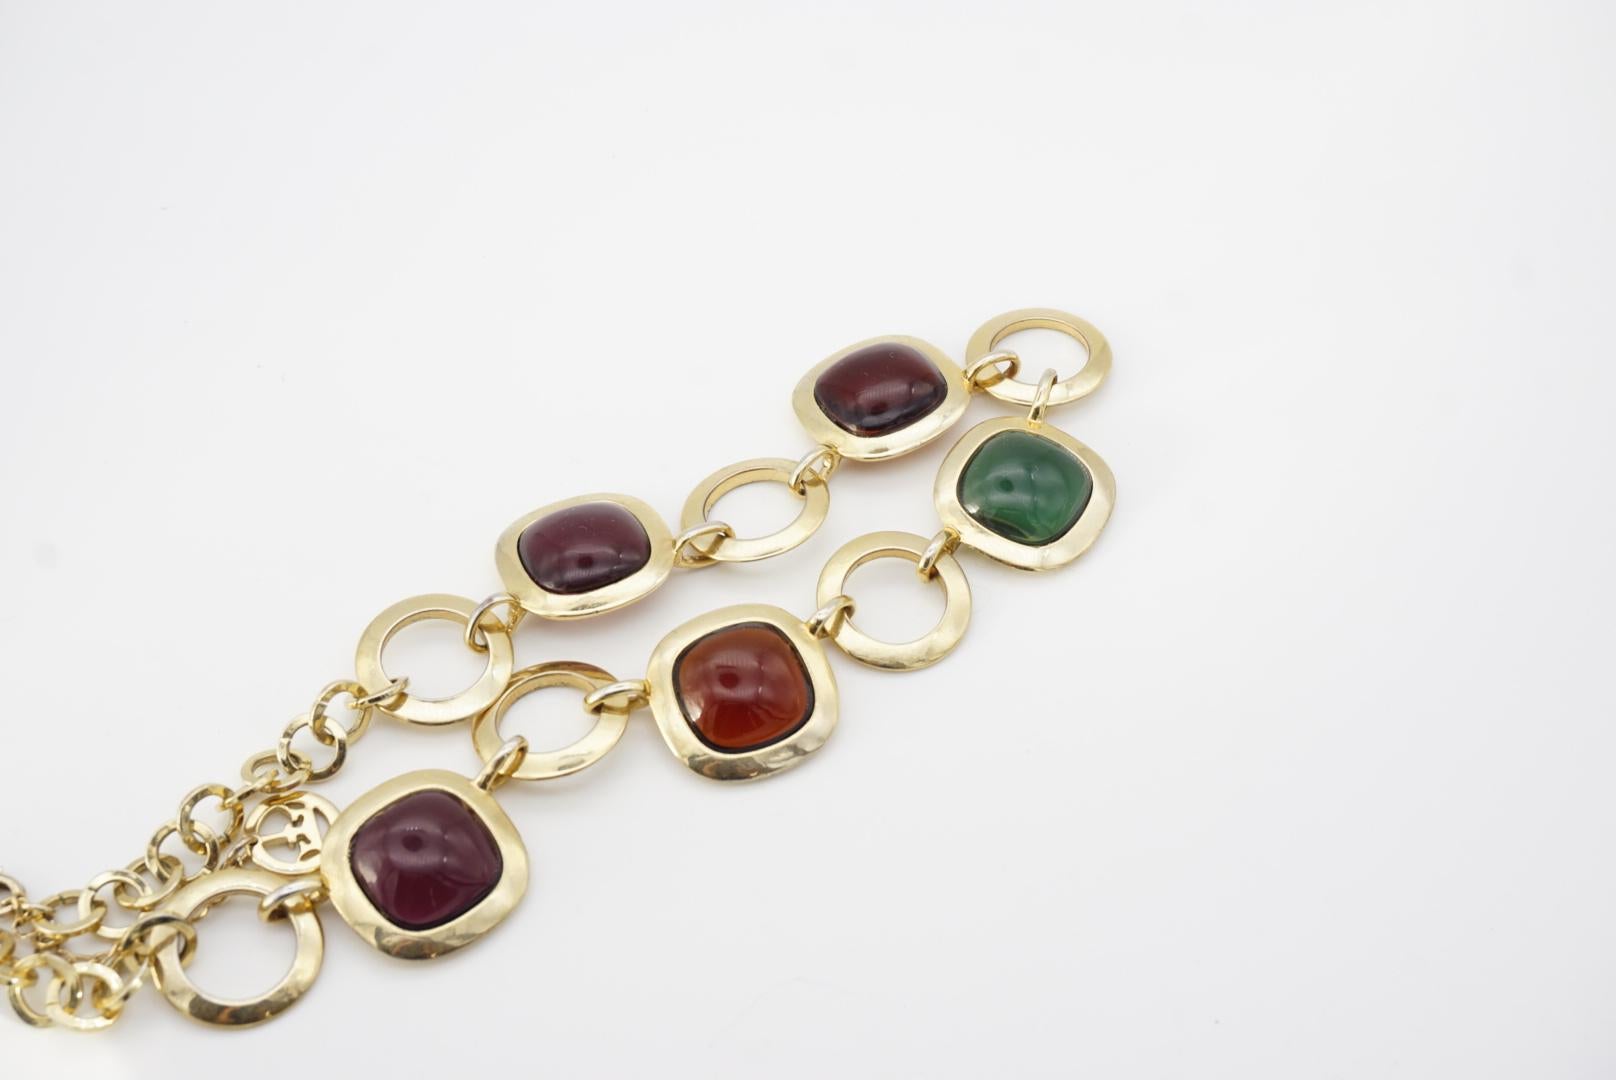 Crown Trifari 1950s Gripoix Purple Amber Green Round Interlock Pendant Necklace For Sale 4